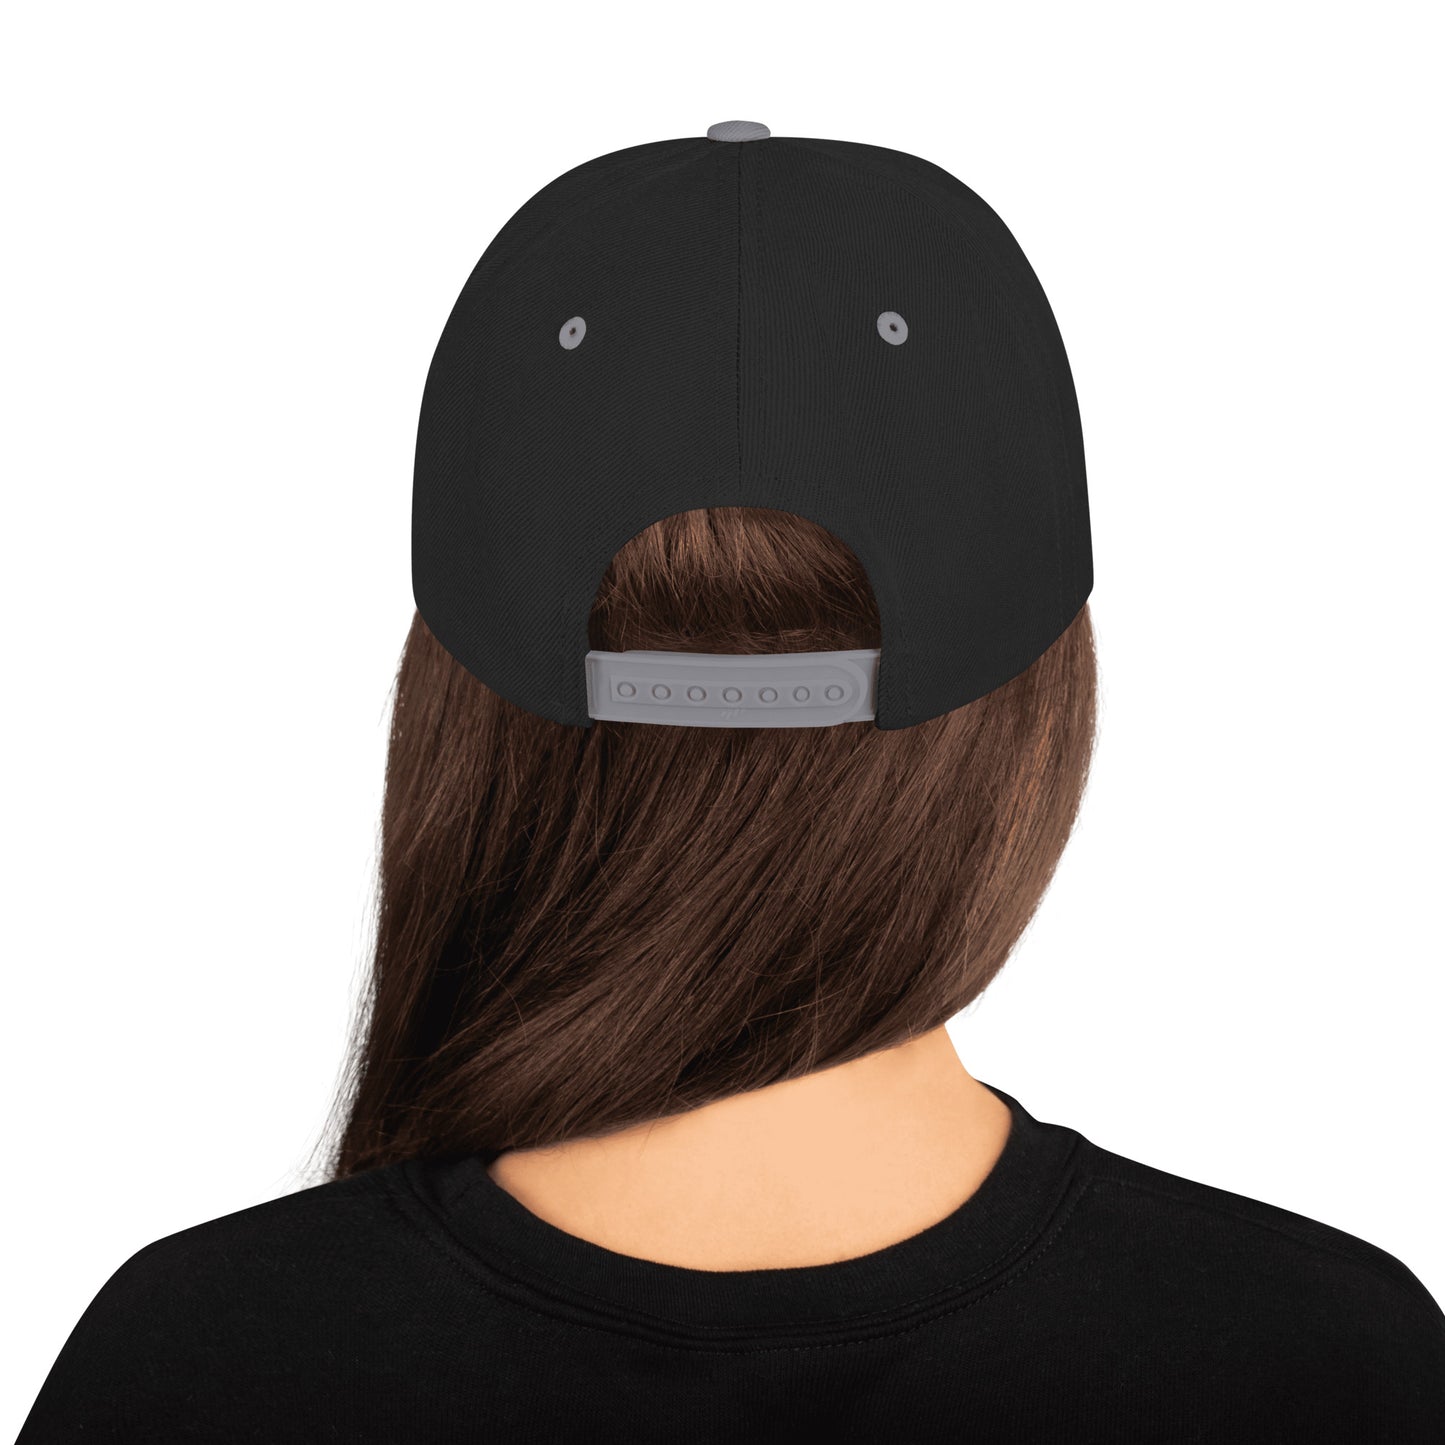 Chingona - Snapback Hat